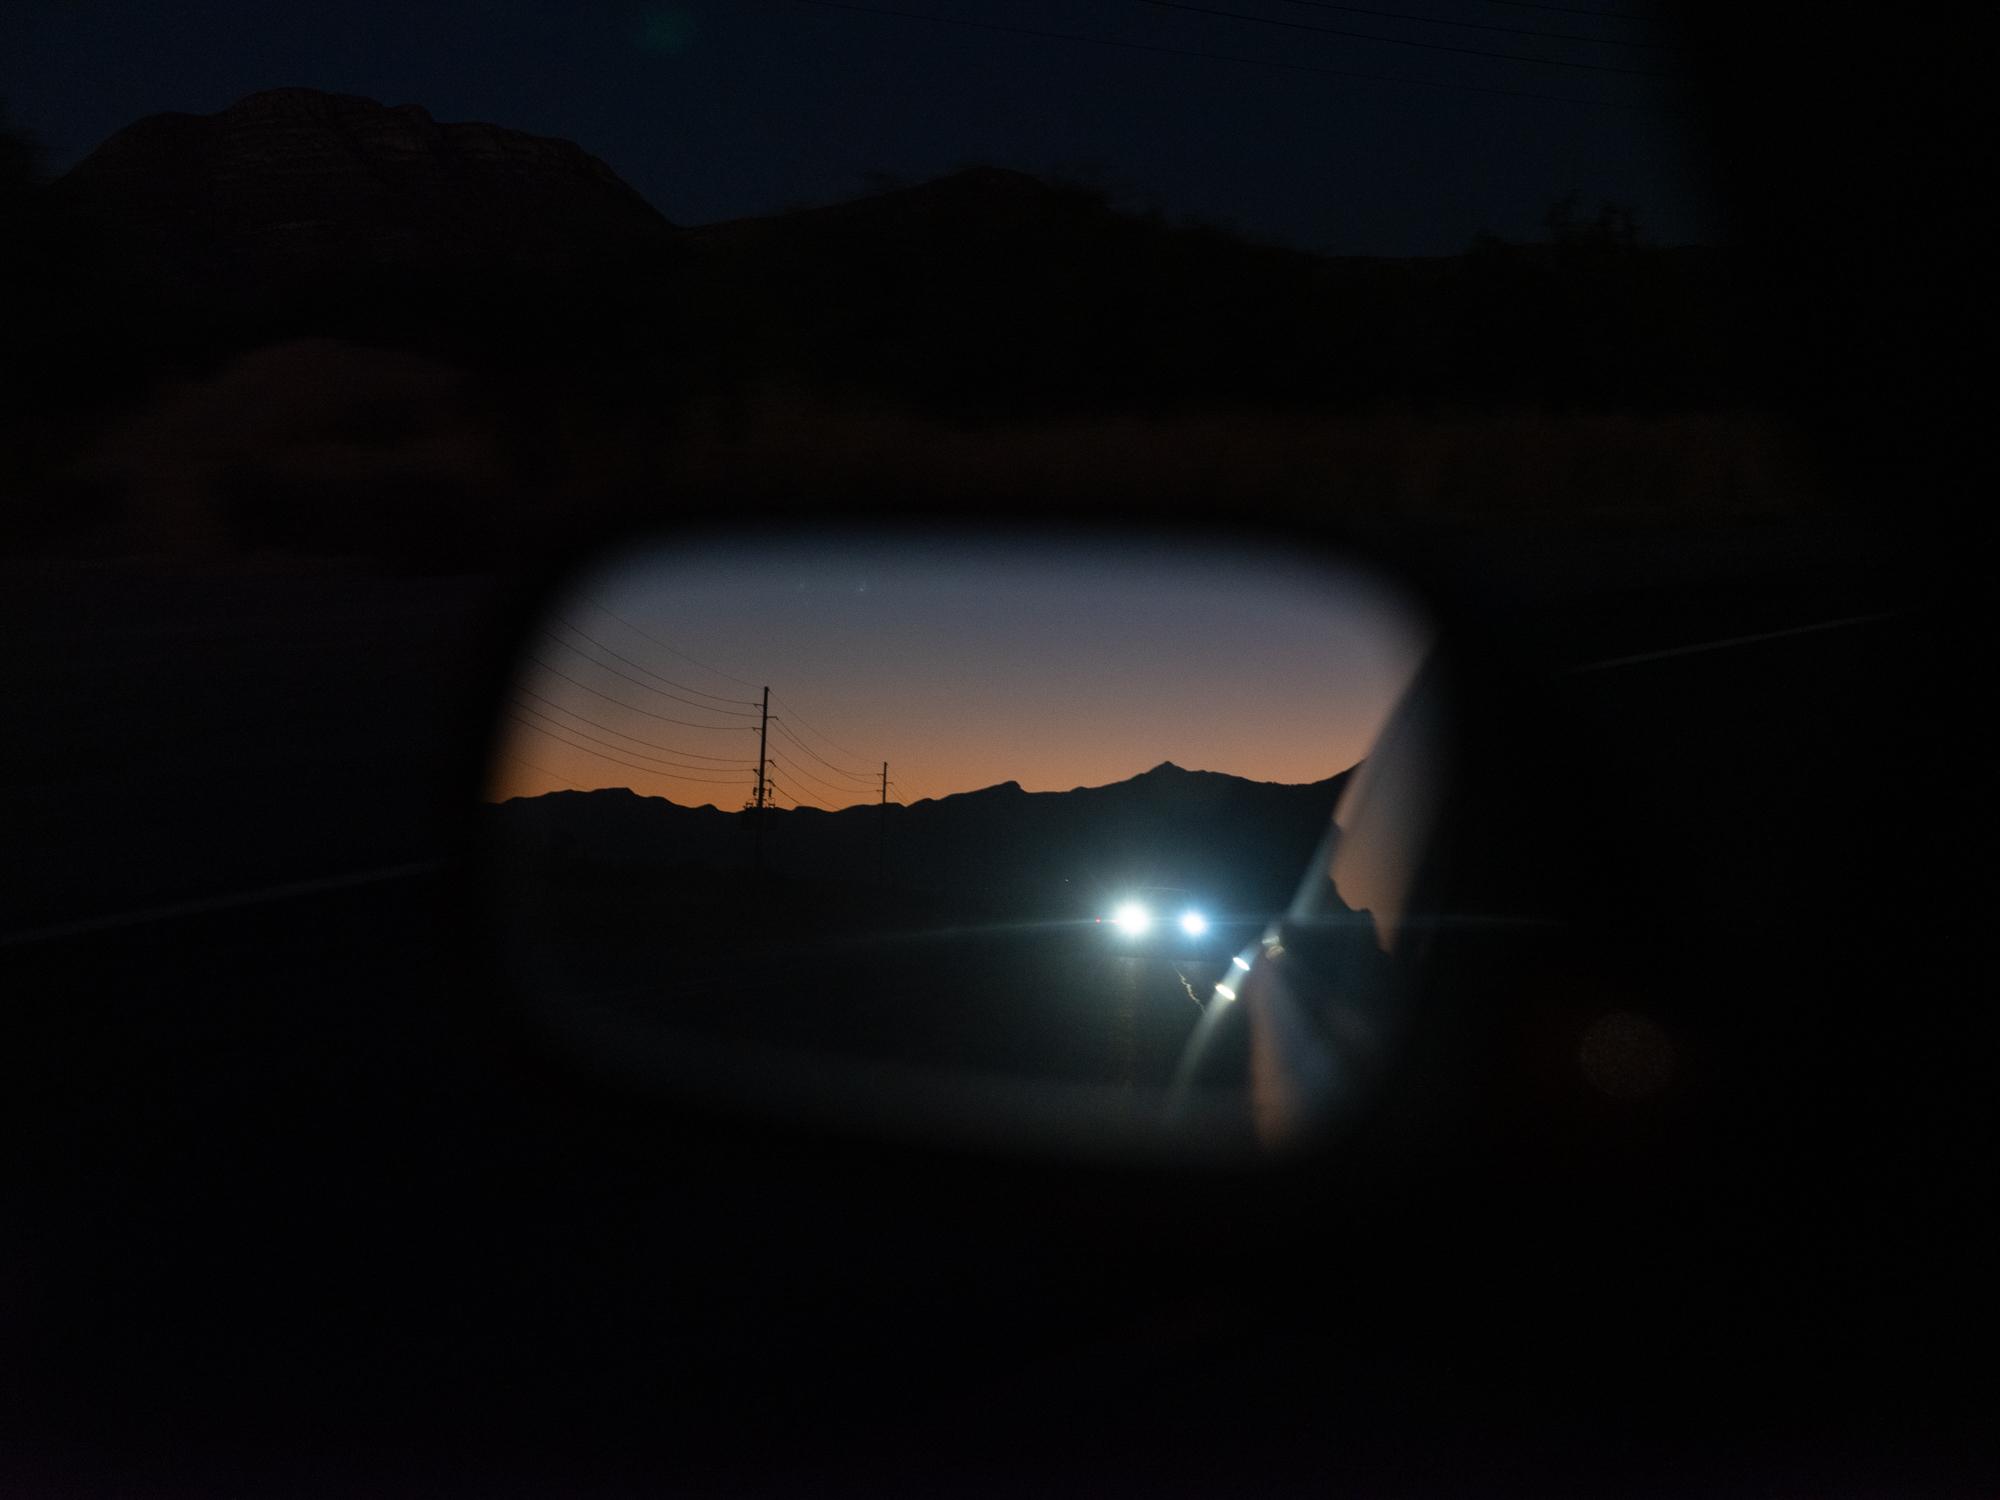 Social Media Migrant Smuggling - Bloomberg Businessweek - Headlights follow a car near Bisbee, AZ, an area along...